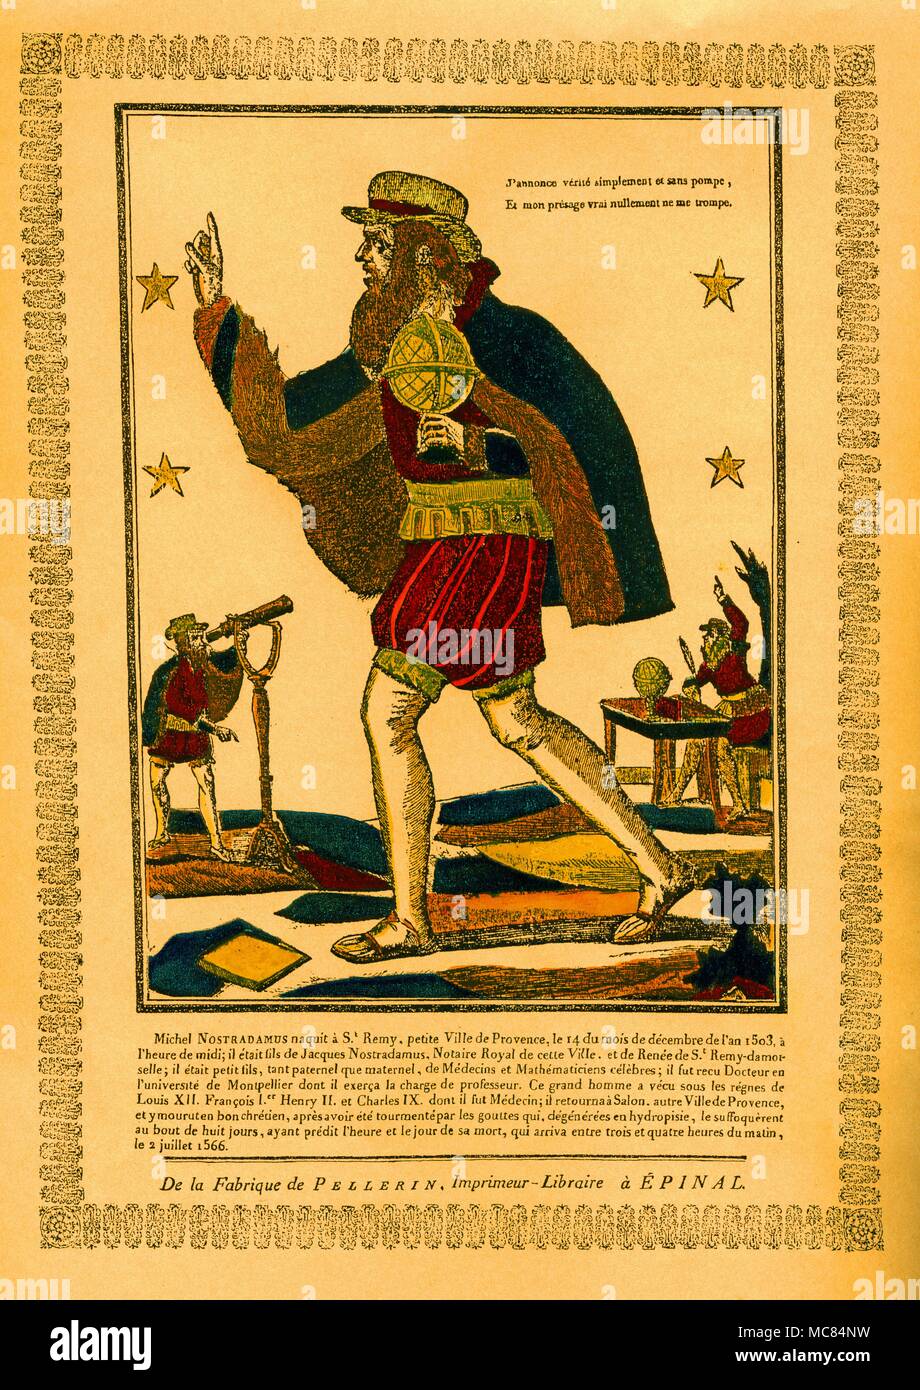 Epinal print of cica 1820, portraying Nostradamus as a wandering scholar/wandering Jew. Stock Photo